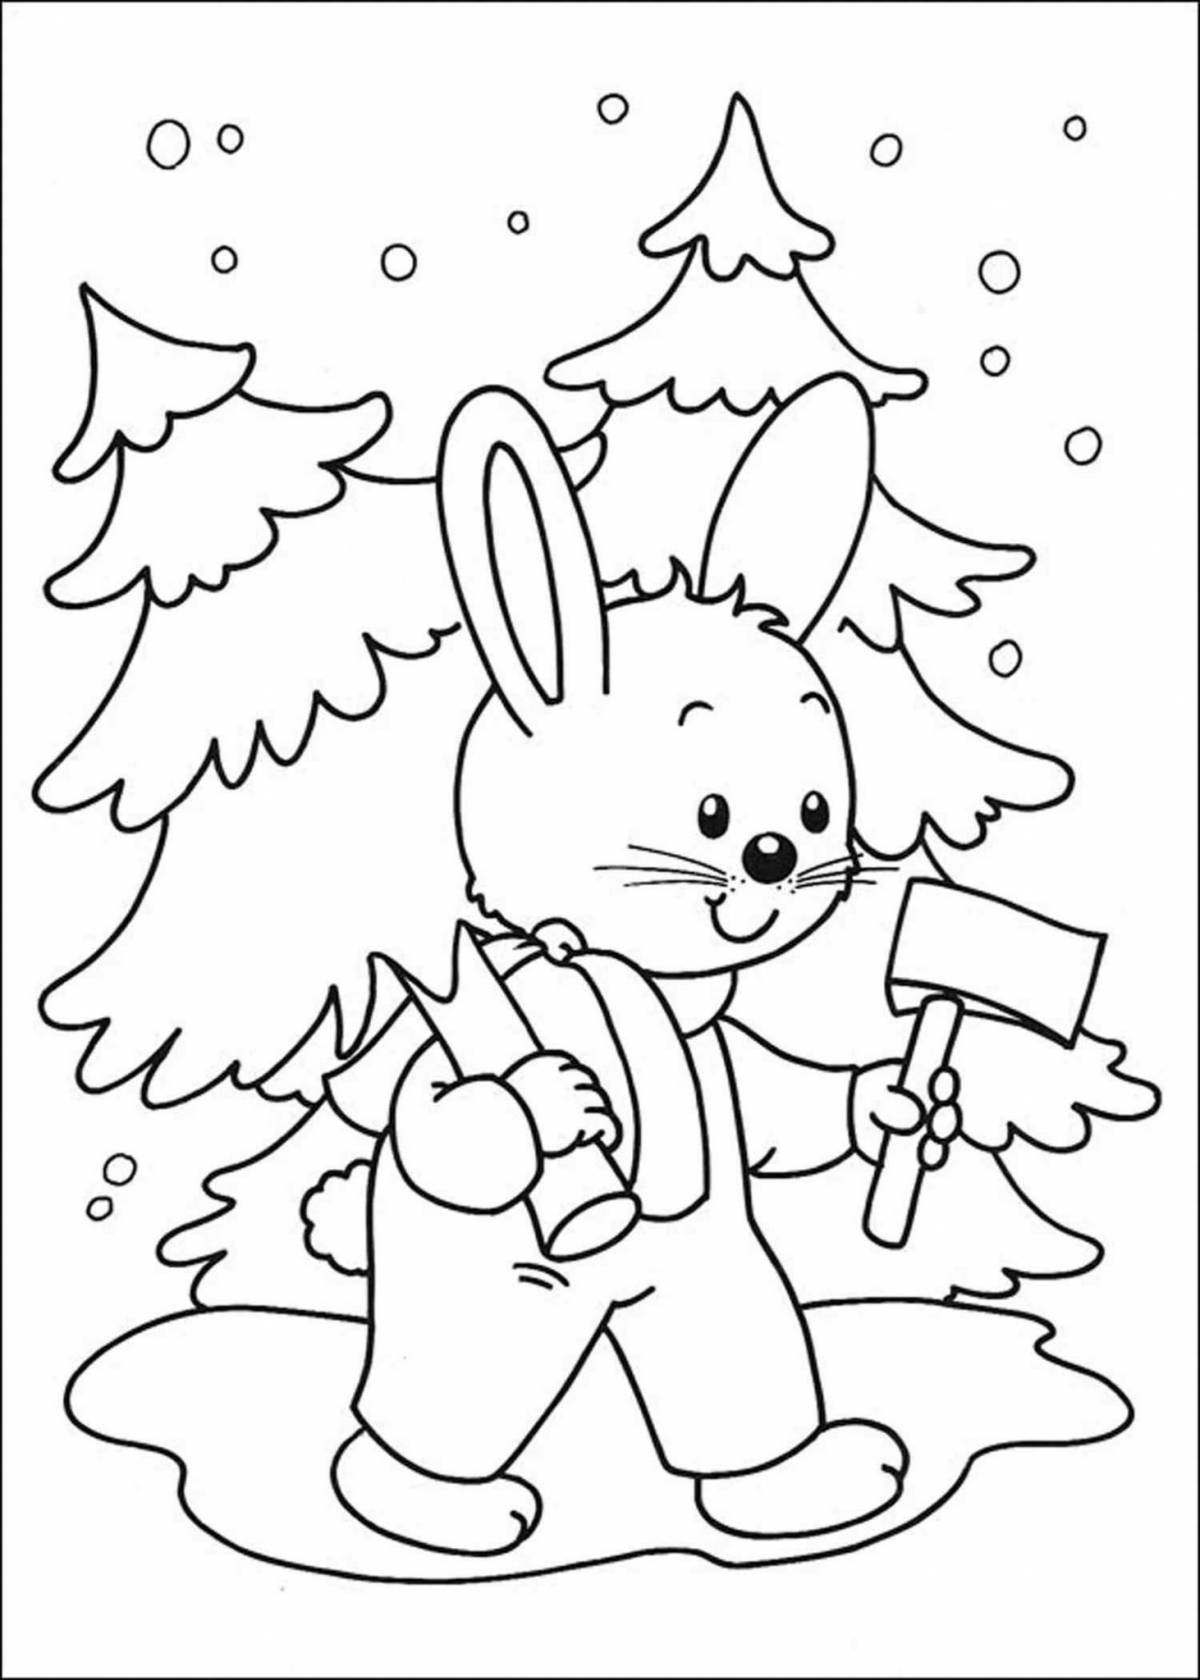 Joyful children's Christmas coloring book